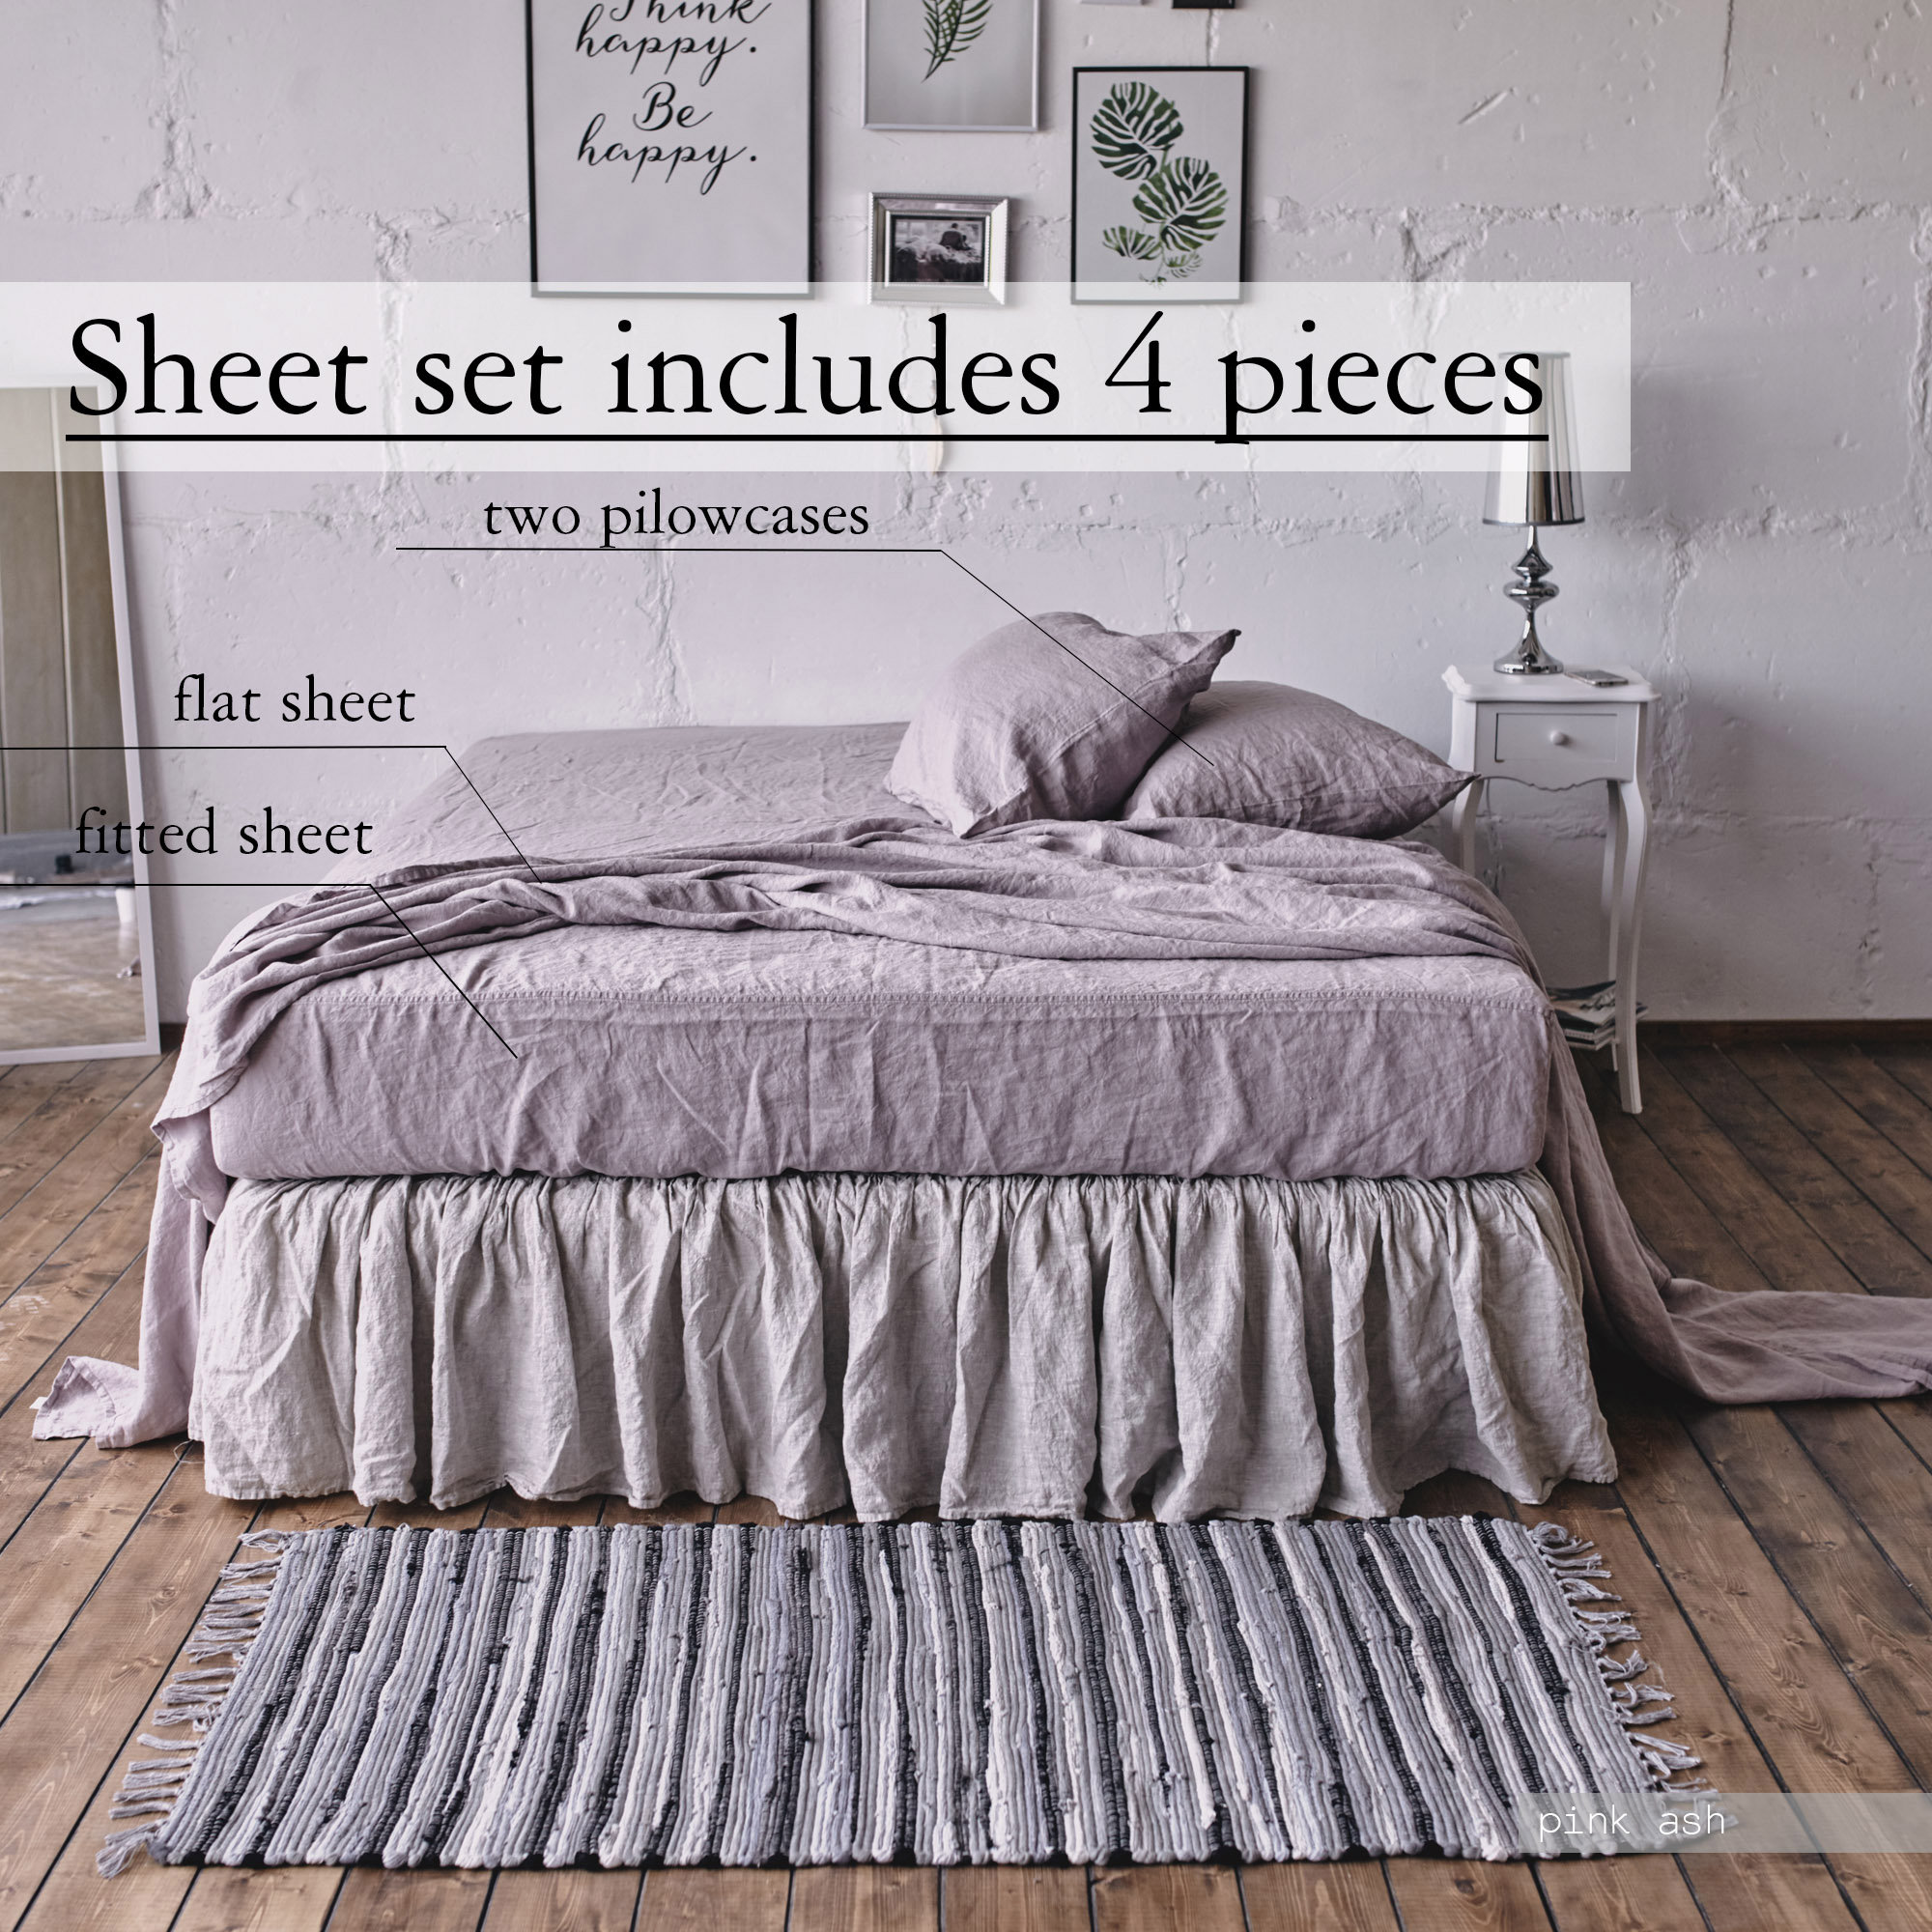 Royal blue linen flat sheet  1 Flat sheet  Softened linen sheet  Stonewashed linen  Linen bedsheet  Farmhouse decor  Shabby chic decor